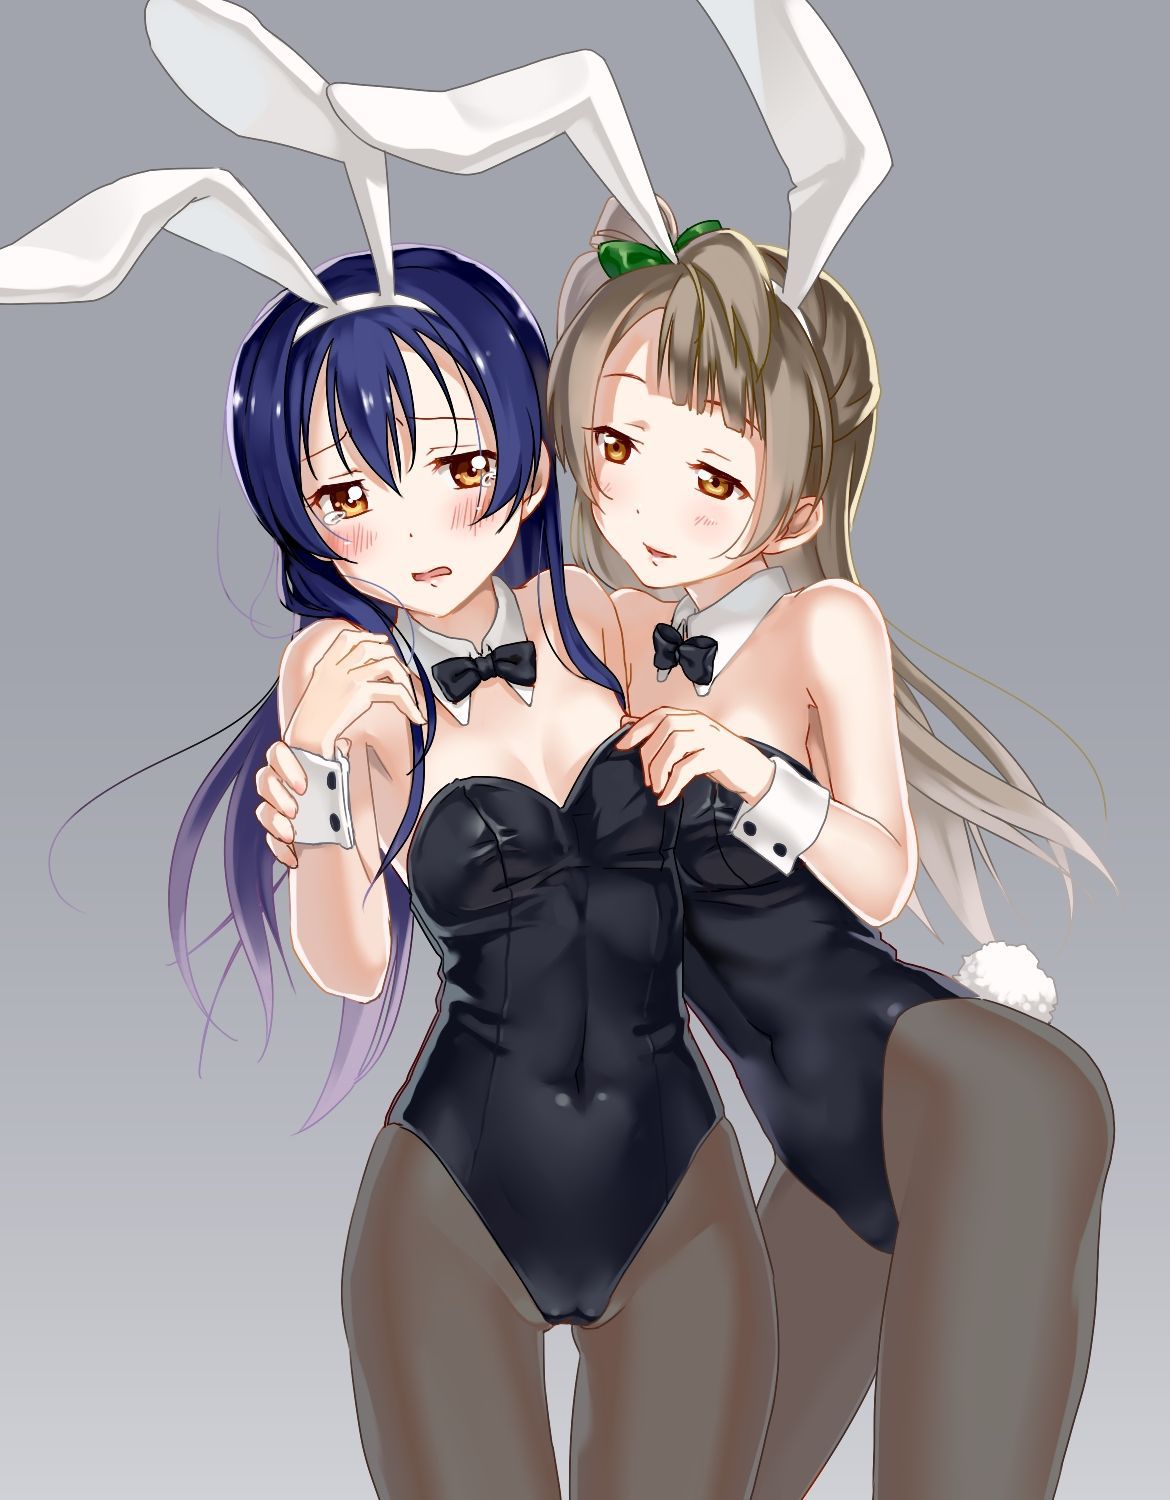 [Secondary, ZIP] bunnysuit dressed girl picture, please! 3